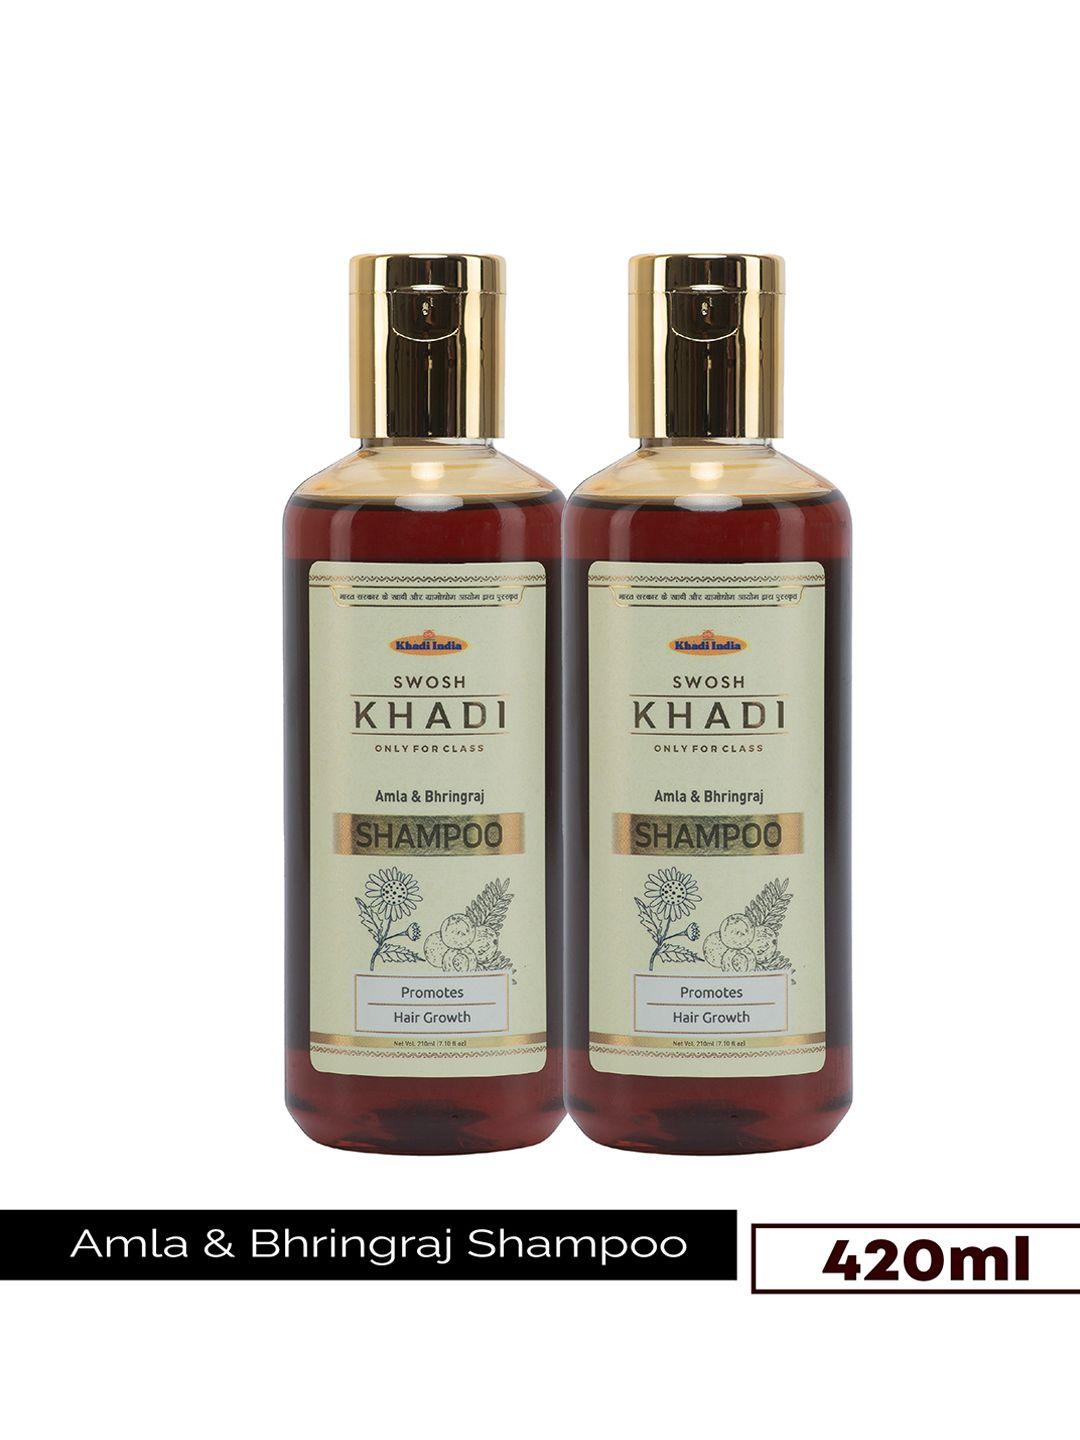 swosh set of 2 khadi amla & bhringraj shampoo for hair growth - 210 ml each